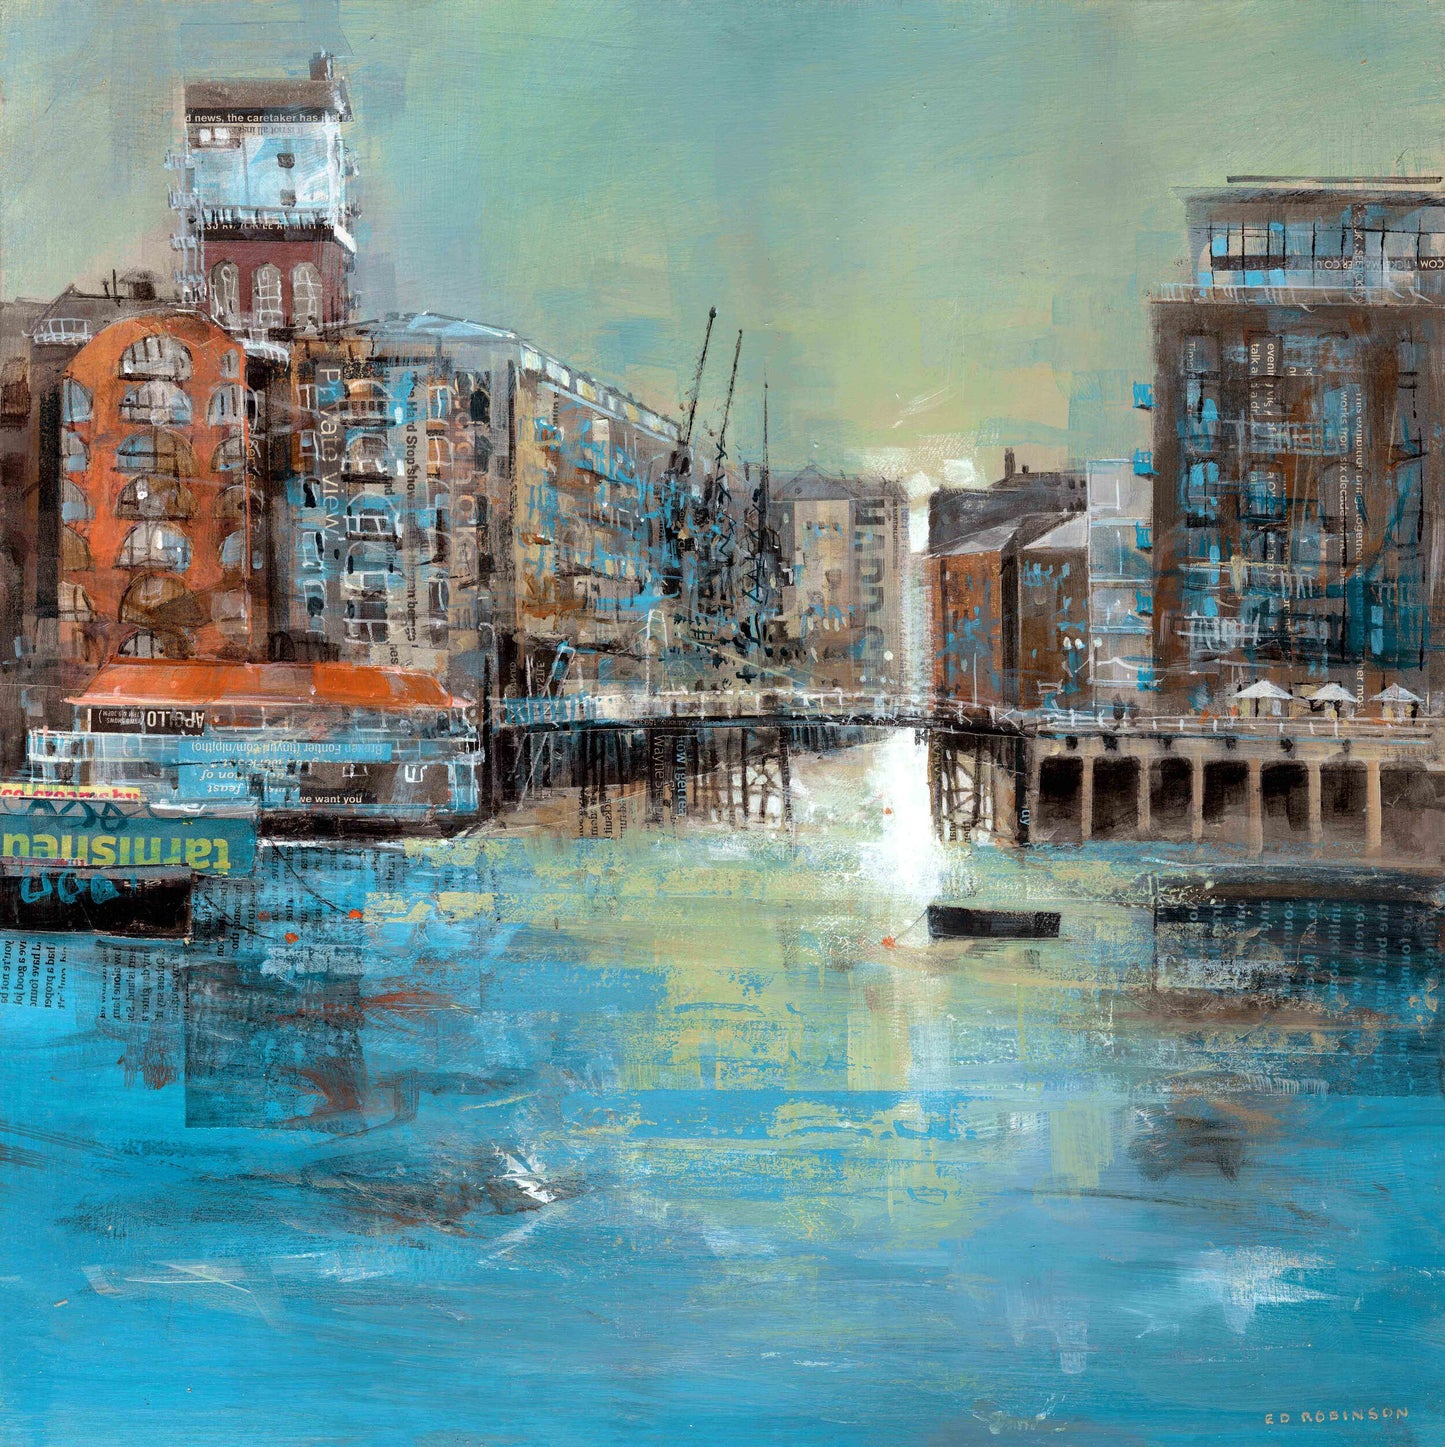 Ed Robinson- Butlers Wharf, Across the Thames